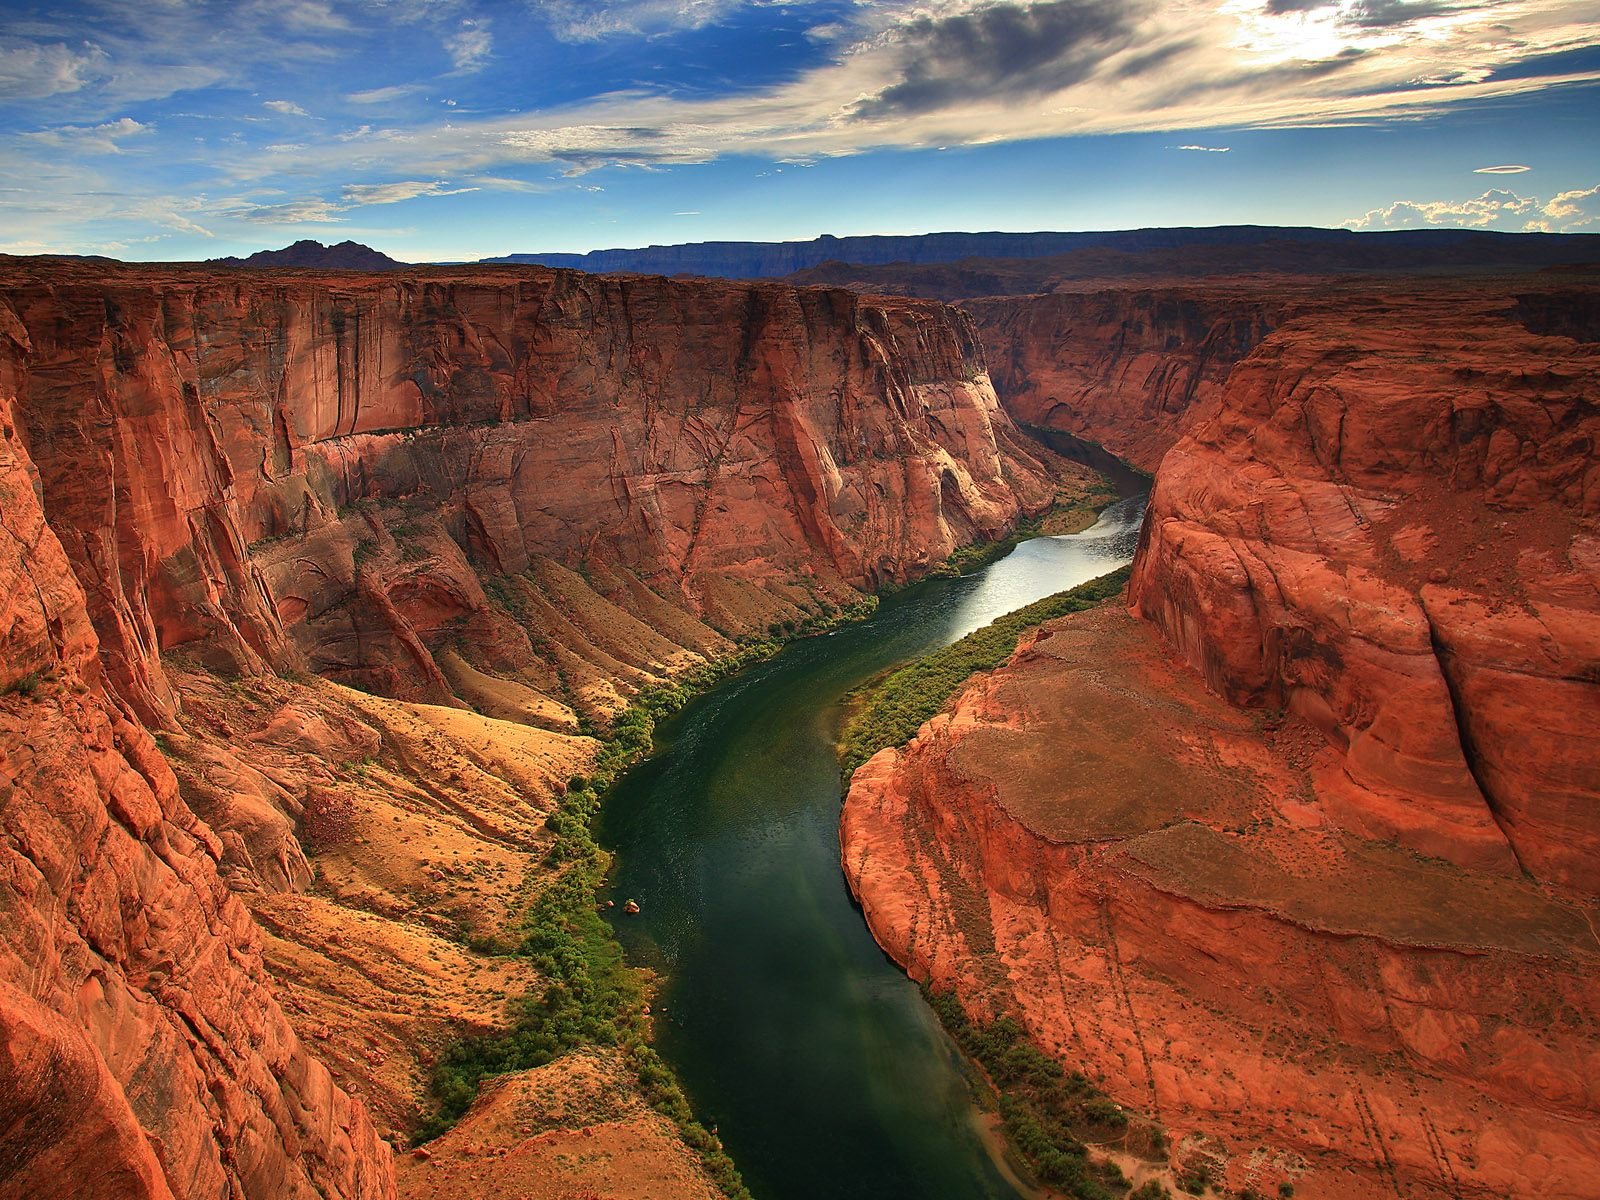  Colorado River Page Arizona   Arizona Photography Desktop Wallpapers 1600x1200